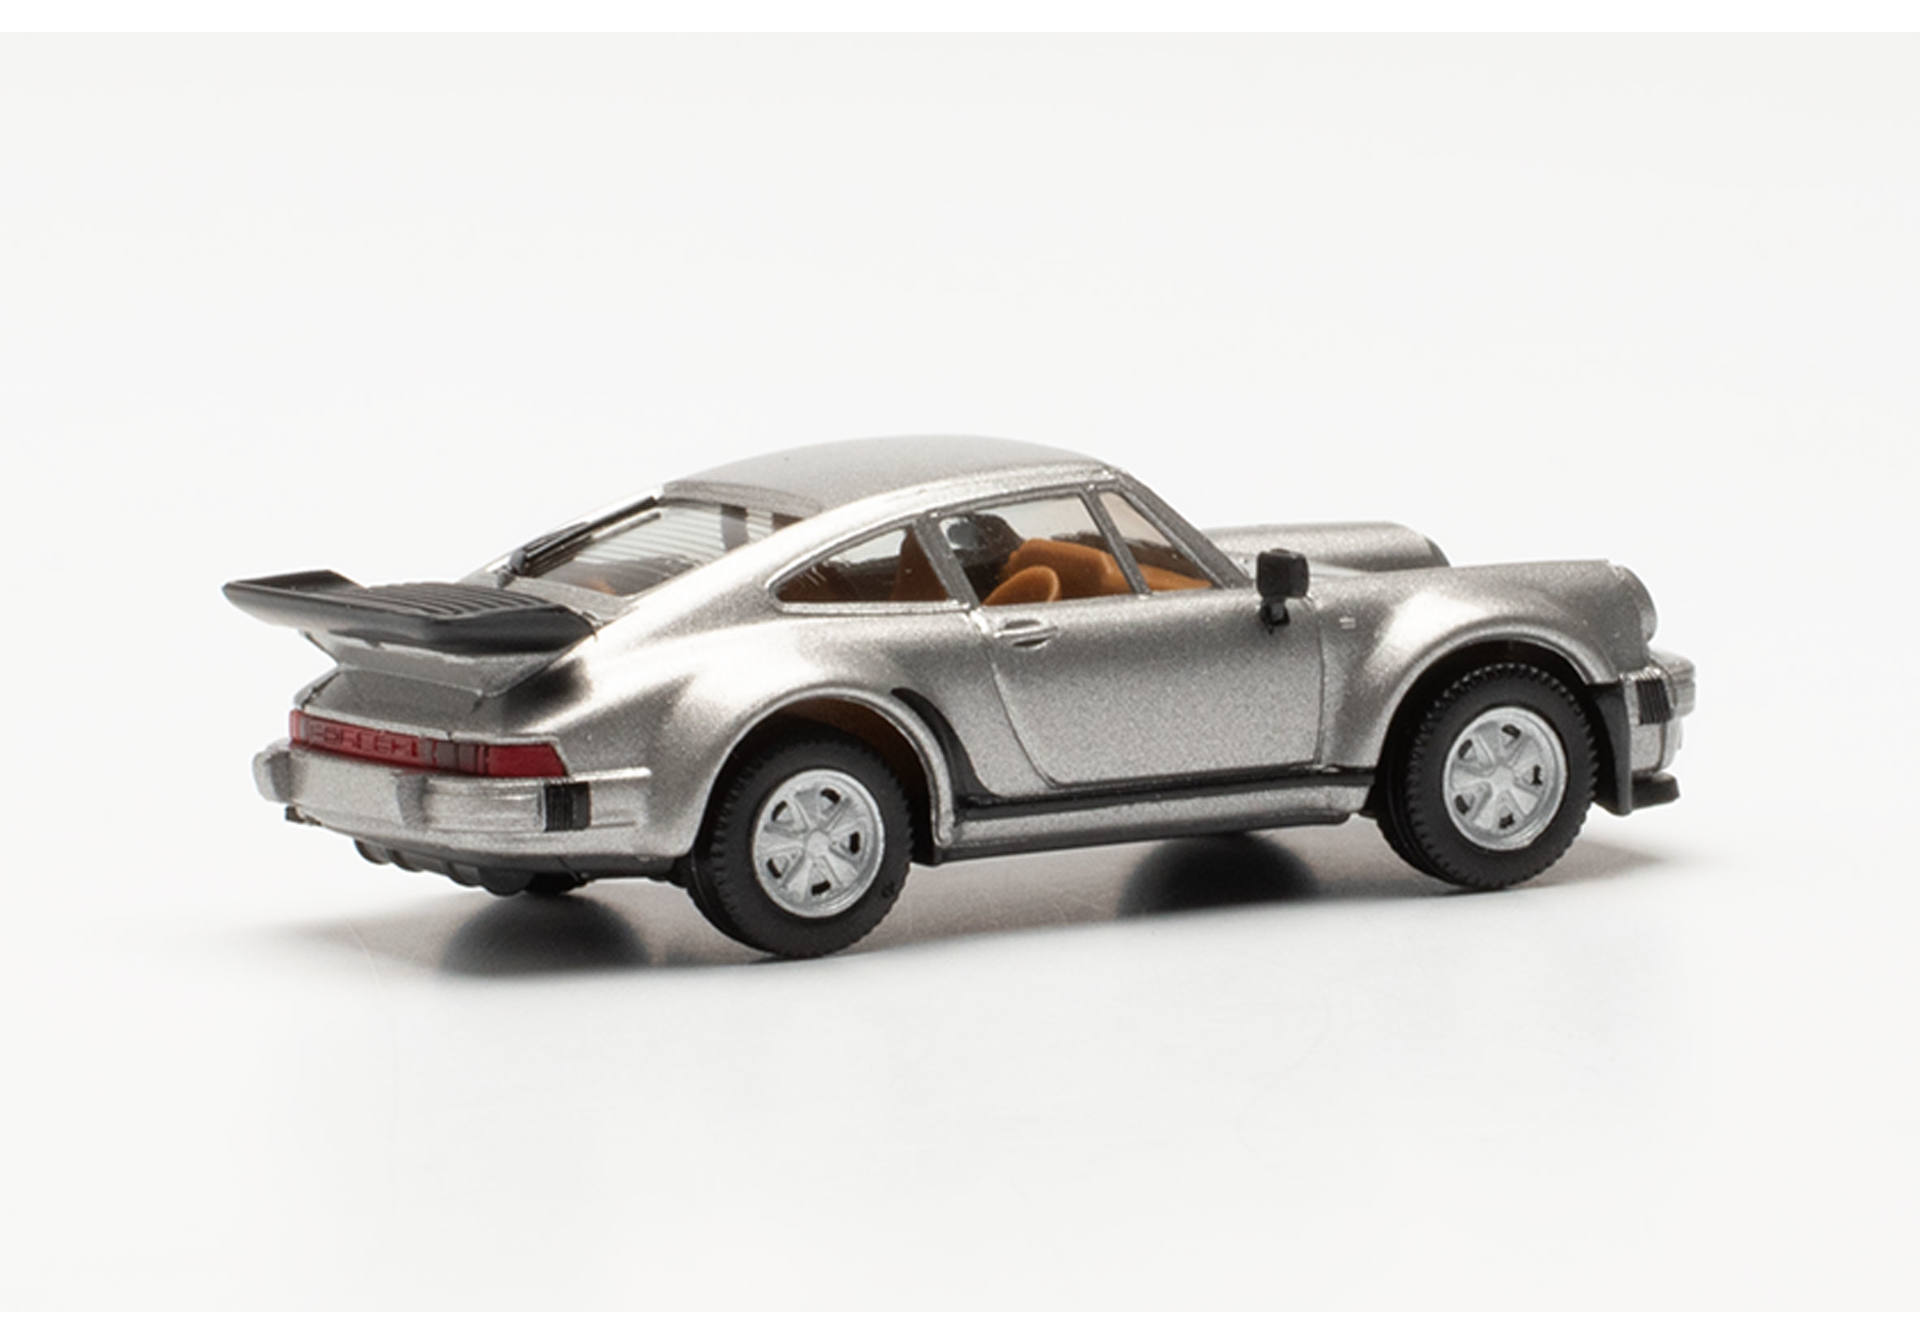 Porsche 911 Turbo, silver metallic